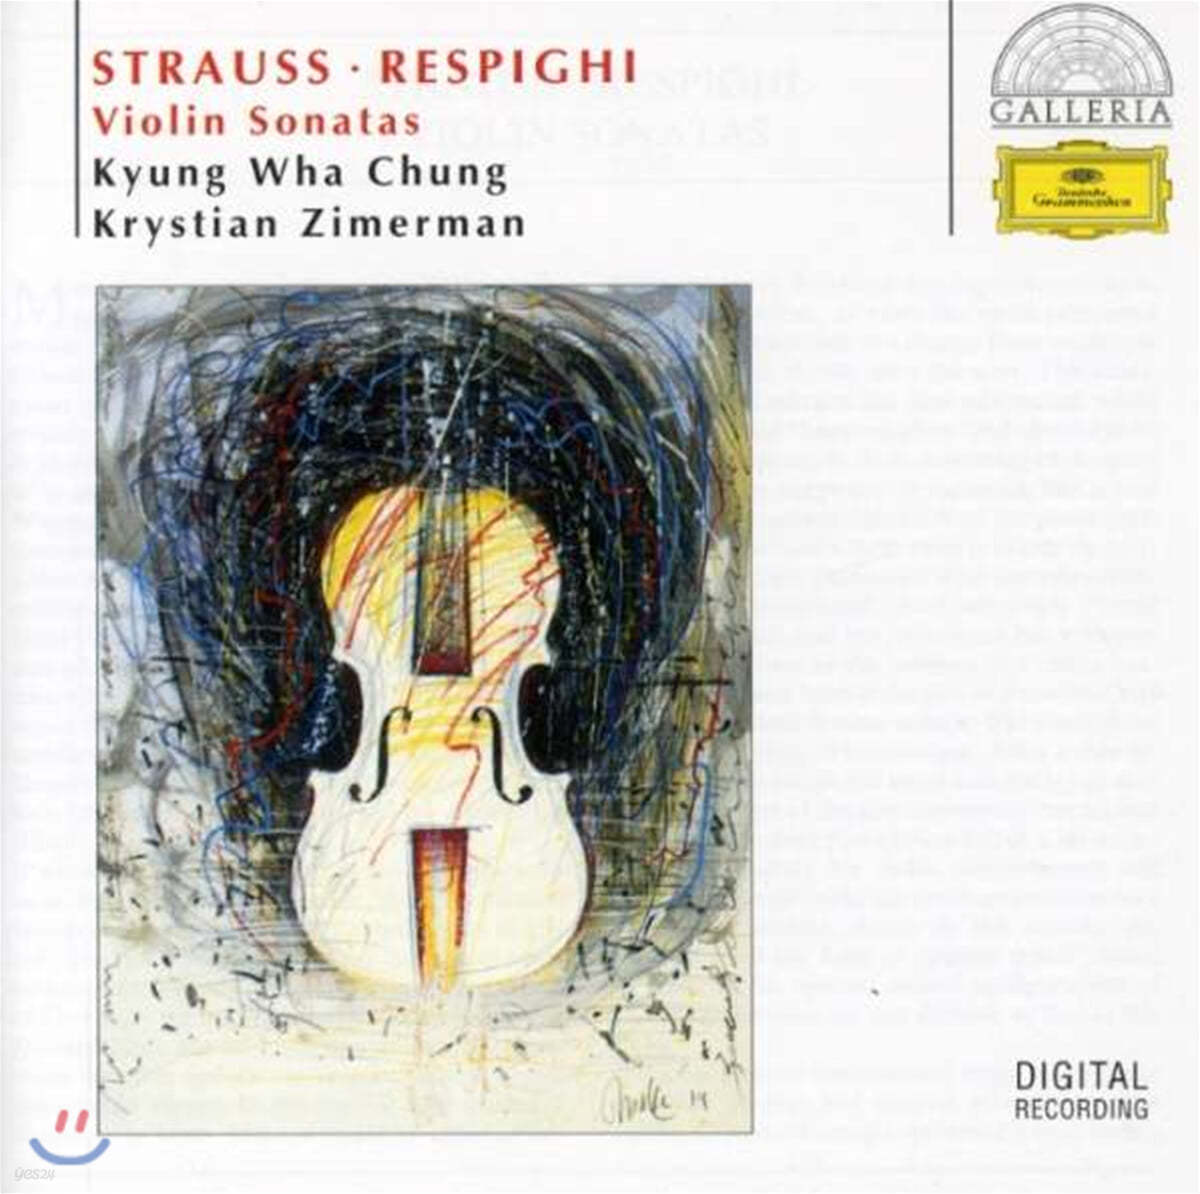 Kyung-Wha Chung 슈트라우스 / 레스피기: 바이올린 소나타 (R.Strauss / Respighi : Violin Sonatas) 